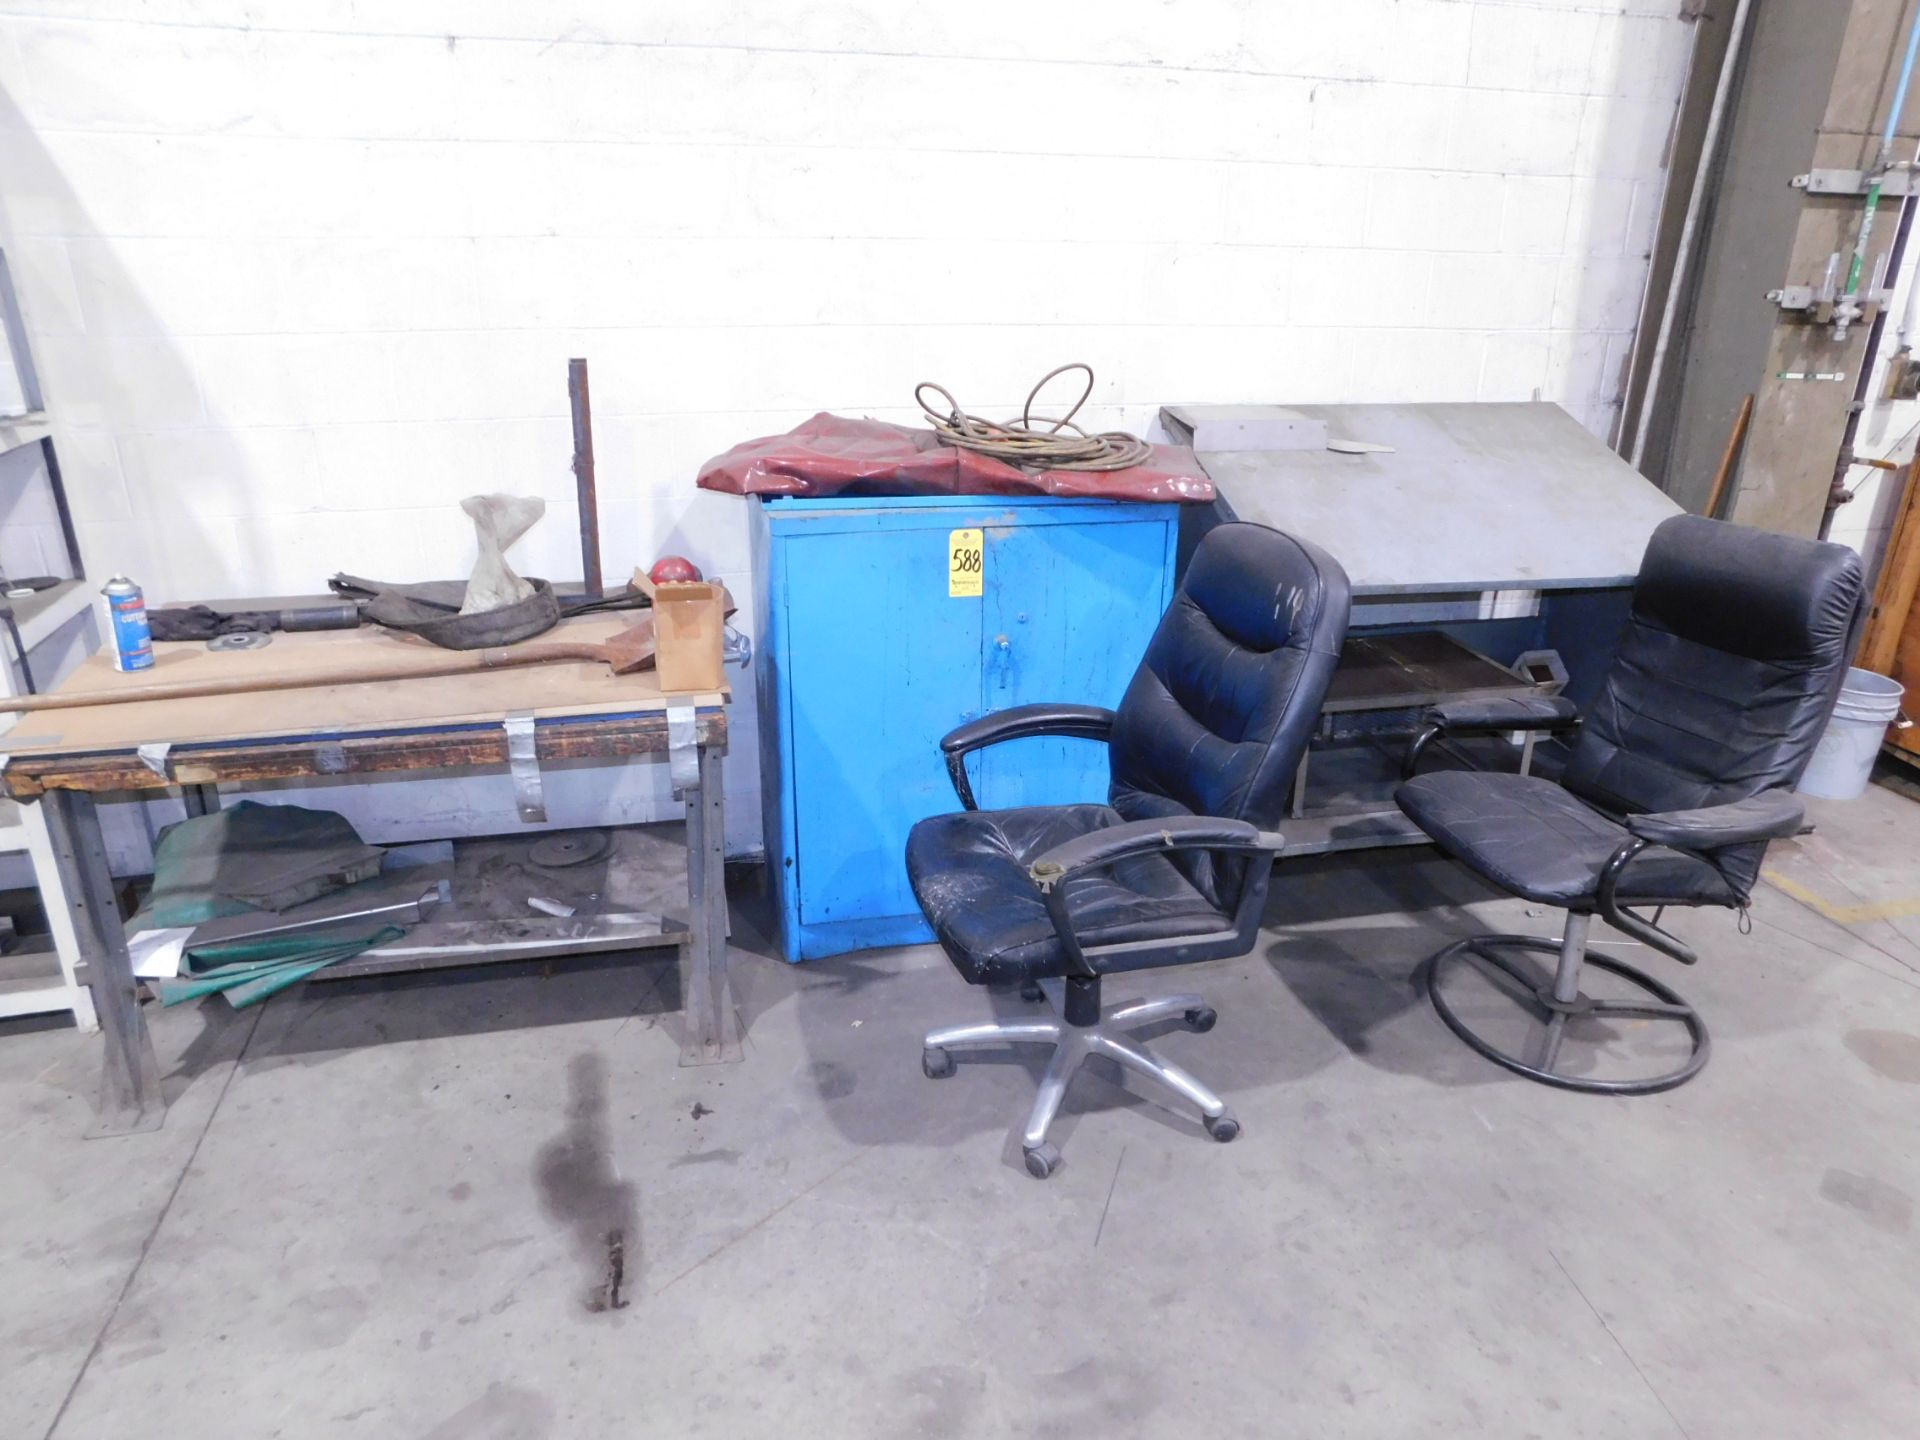 2-Door Metal Cabinet, Foremans Desk, Workbench and Chairs